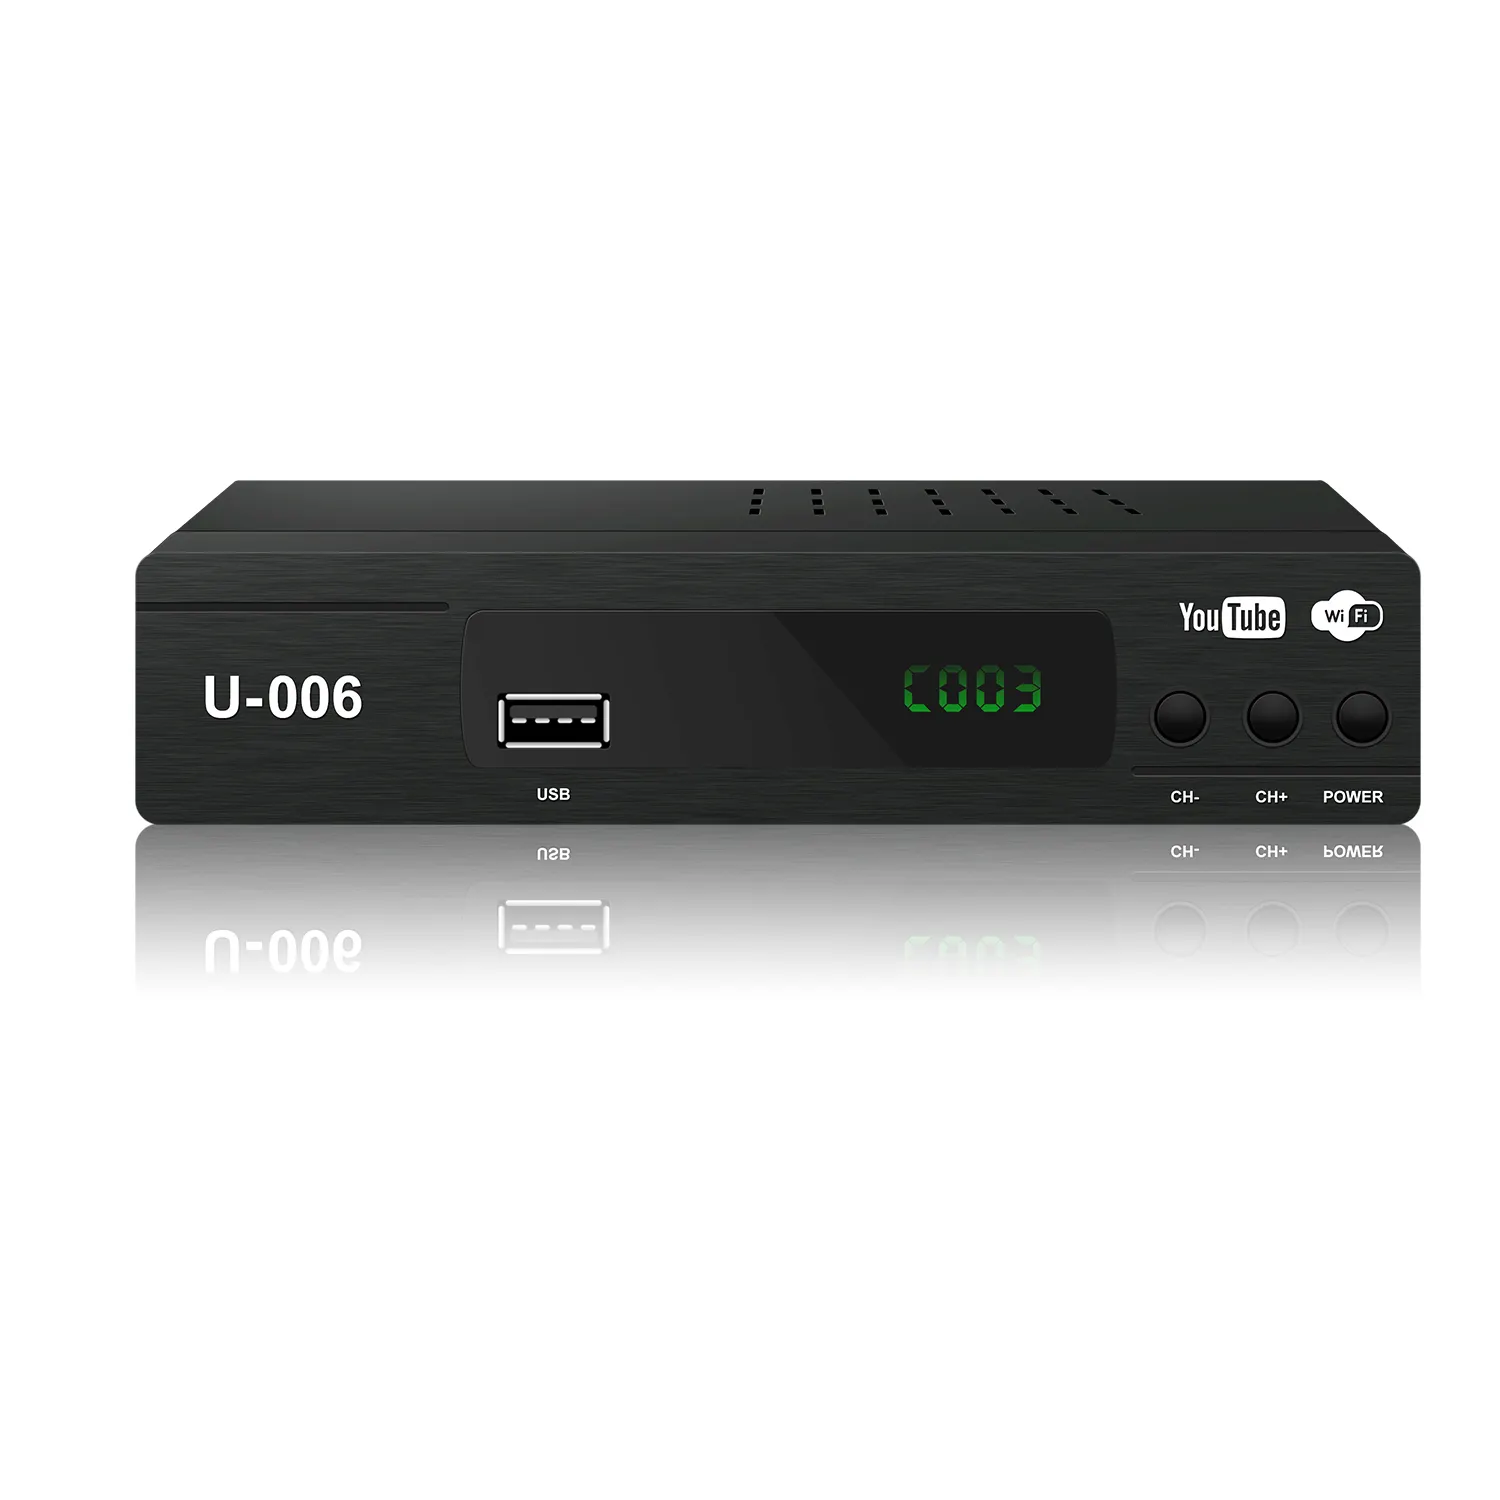 USB 2.0 עבור PVR,TIMESHIFT, תוכנת שדרוג וקבצי מדיה השמעת ISDB-T ממיר FHD 1080P MPEG4 H.264 מפענח ממיר